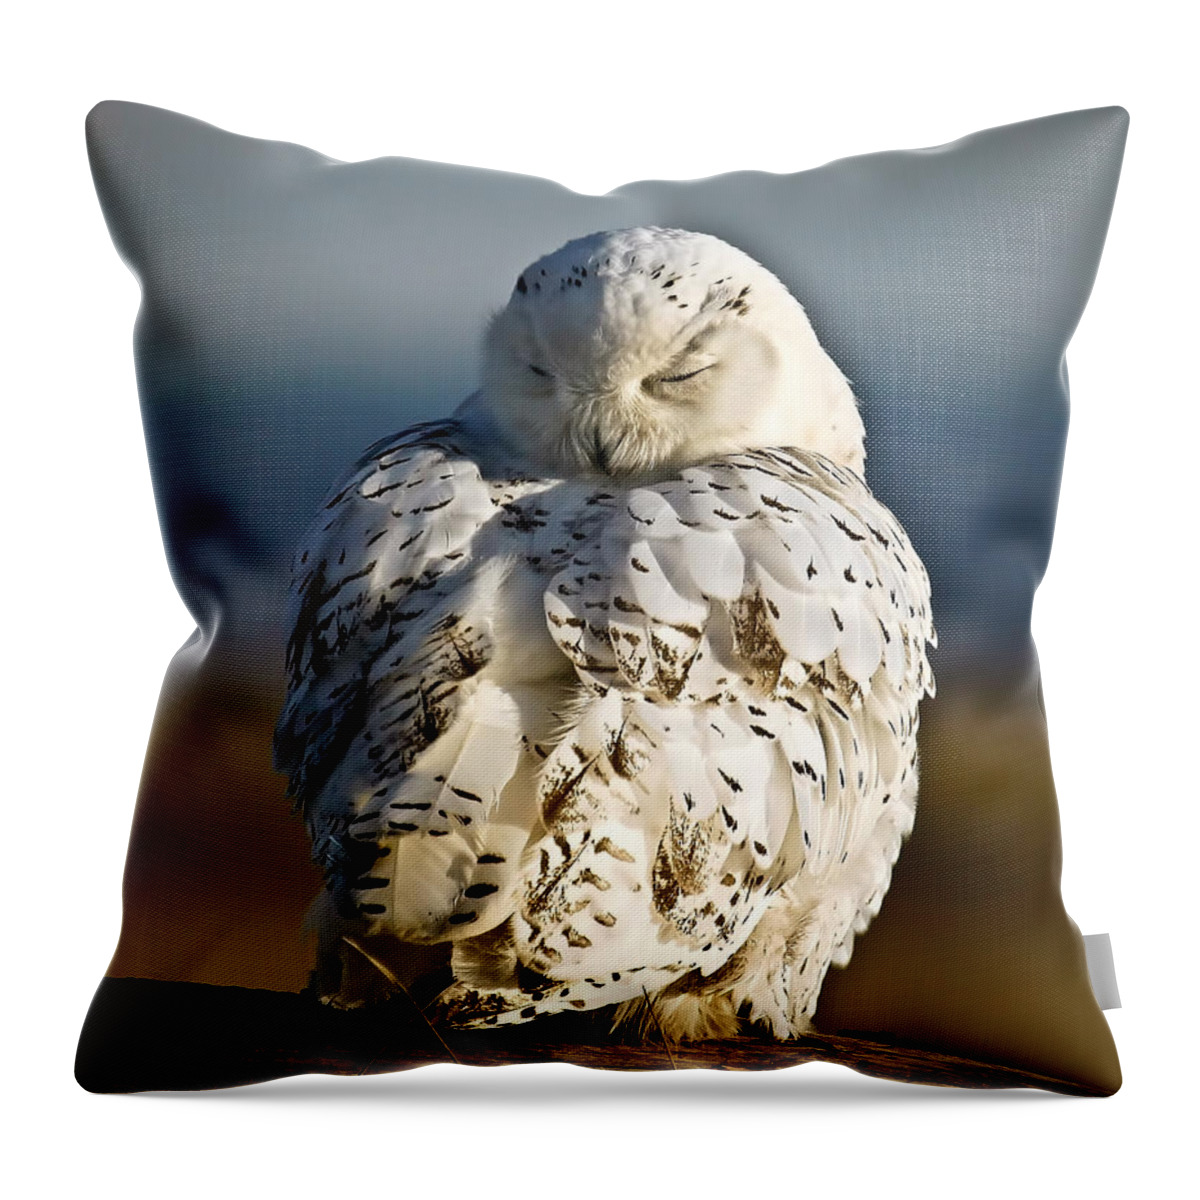 Snowy Owl Throw Pillow featuring the photograph Sleeping Snowy Owl by Steve McKinzie